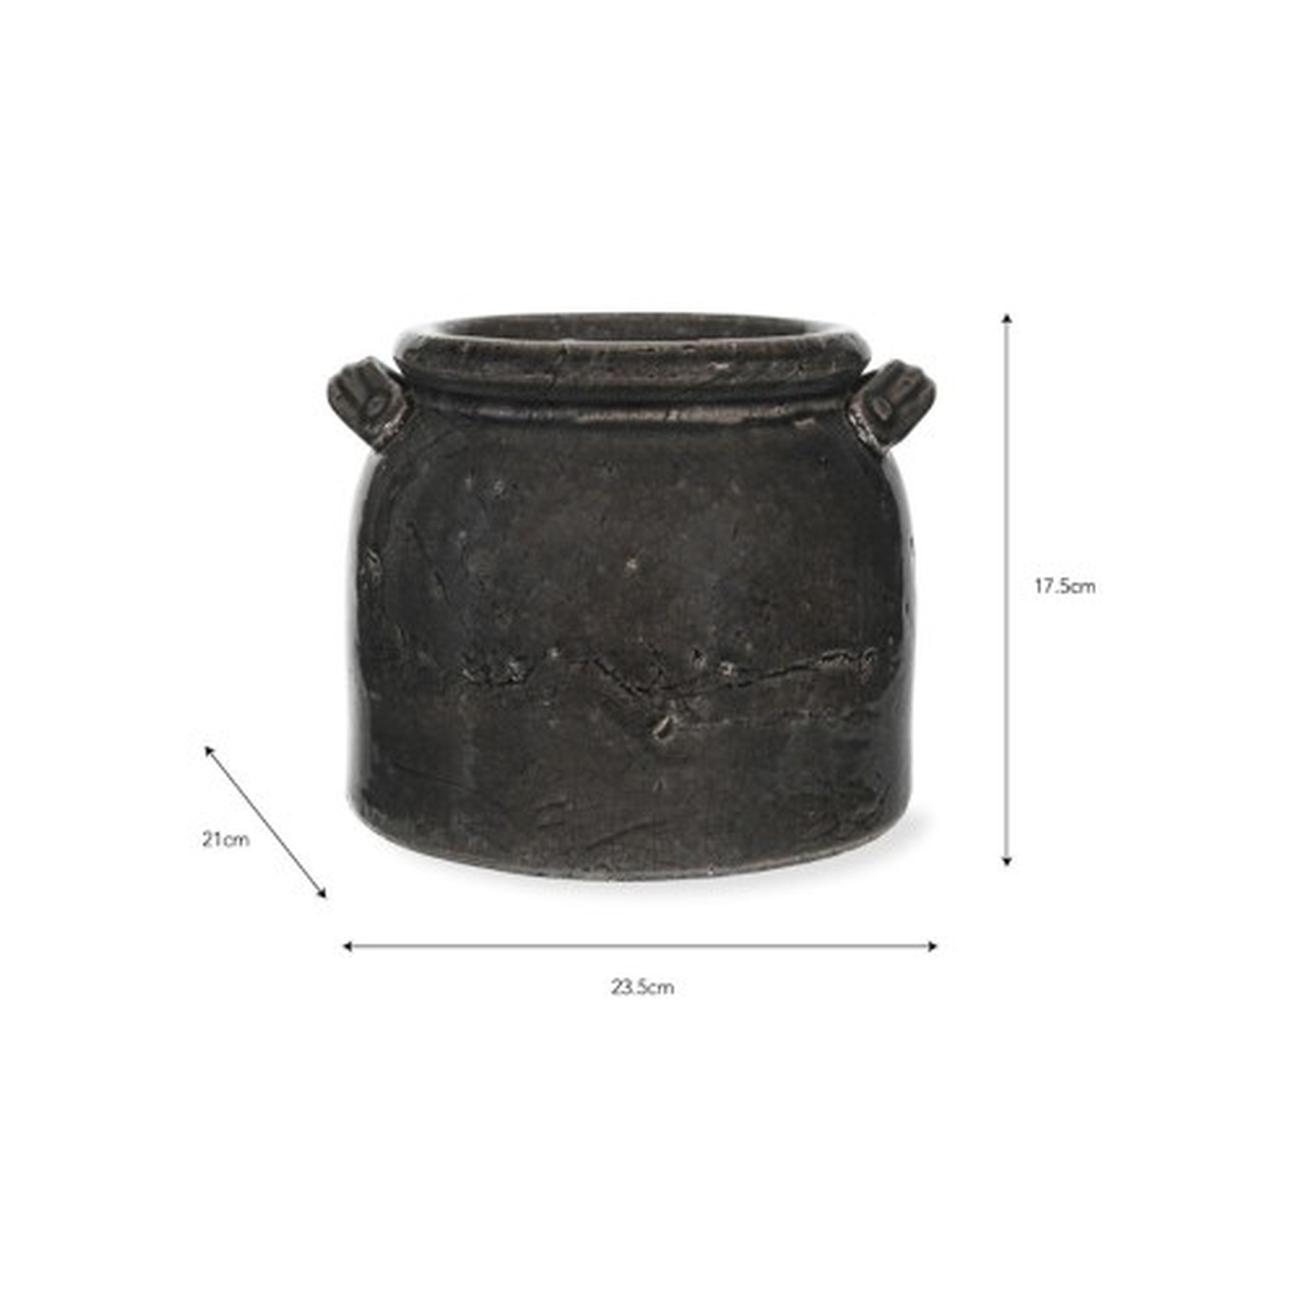 garden-trading-ravello-pot-handles-charcoal - Garden Trading Ravello Pot With Handles Charcoal